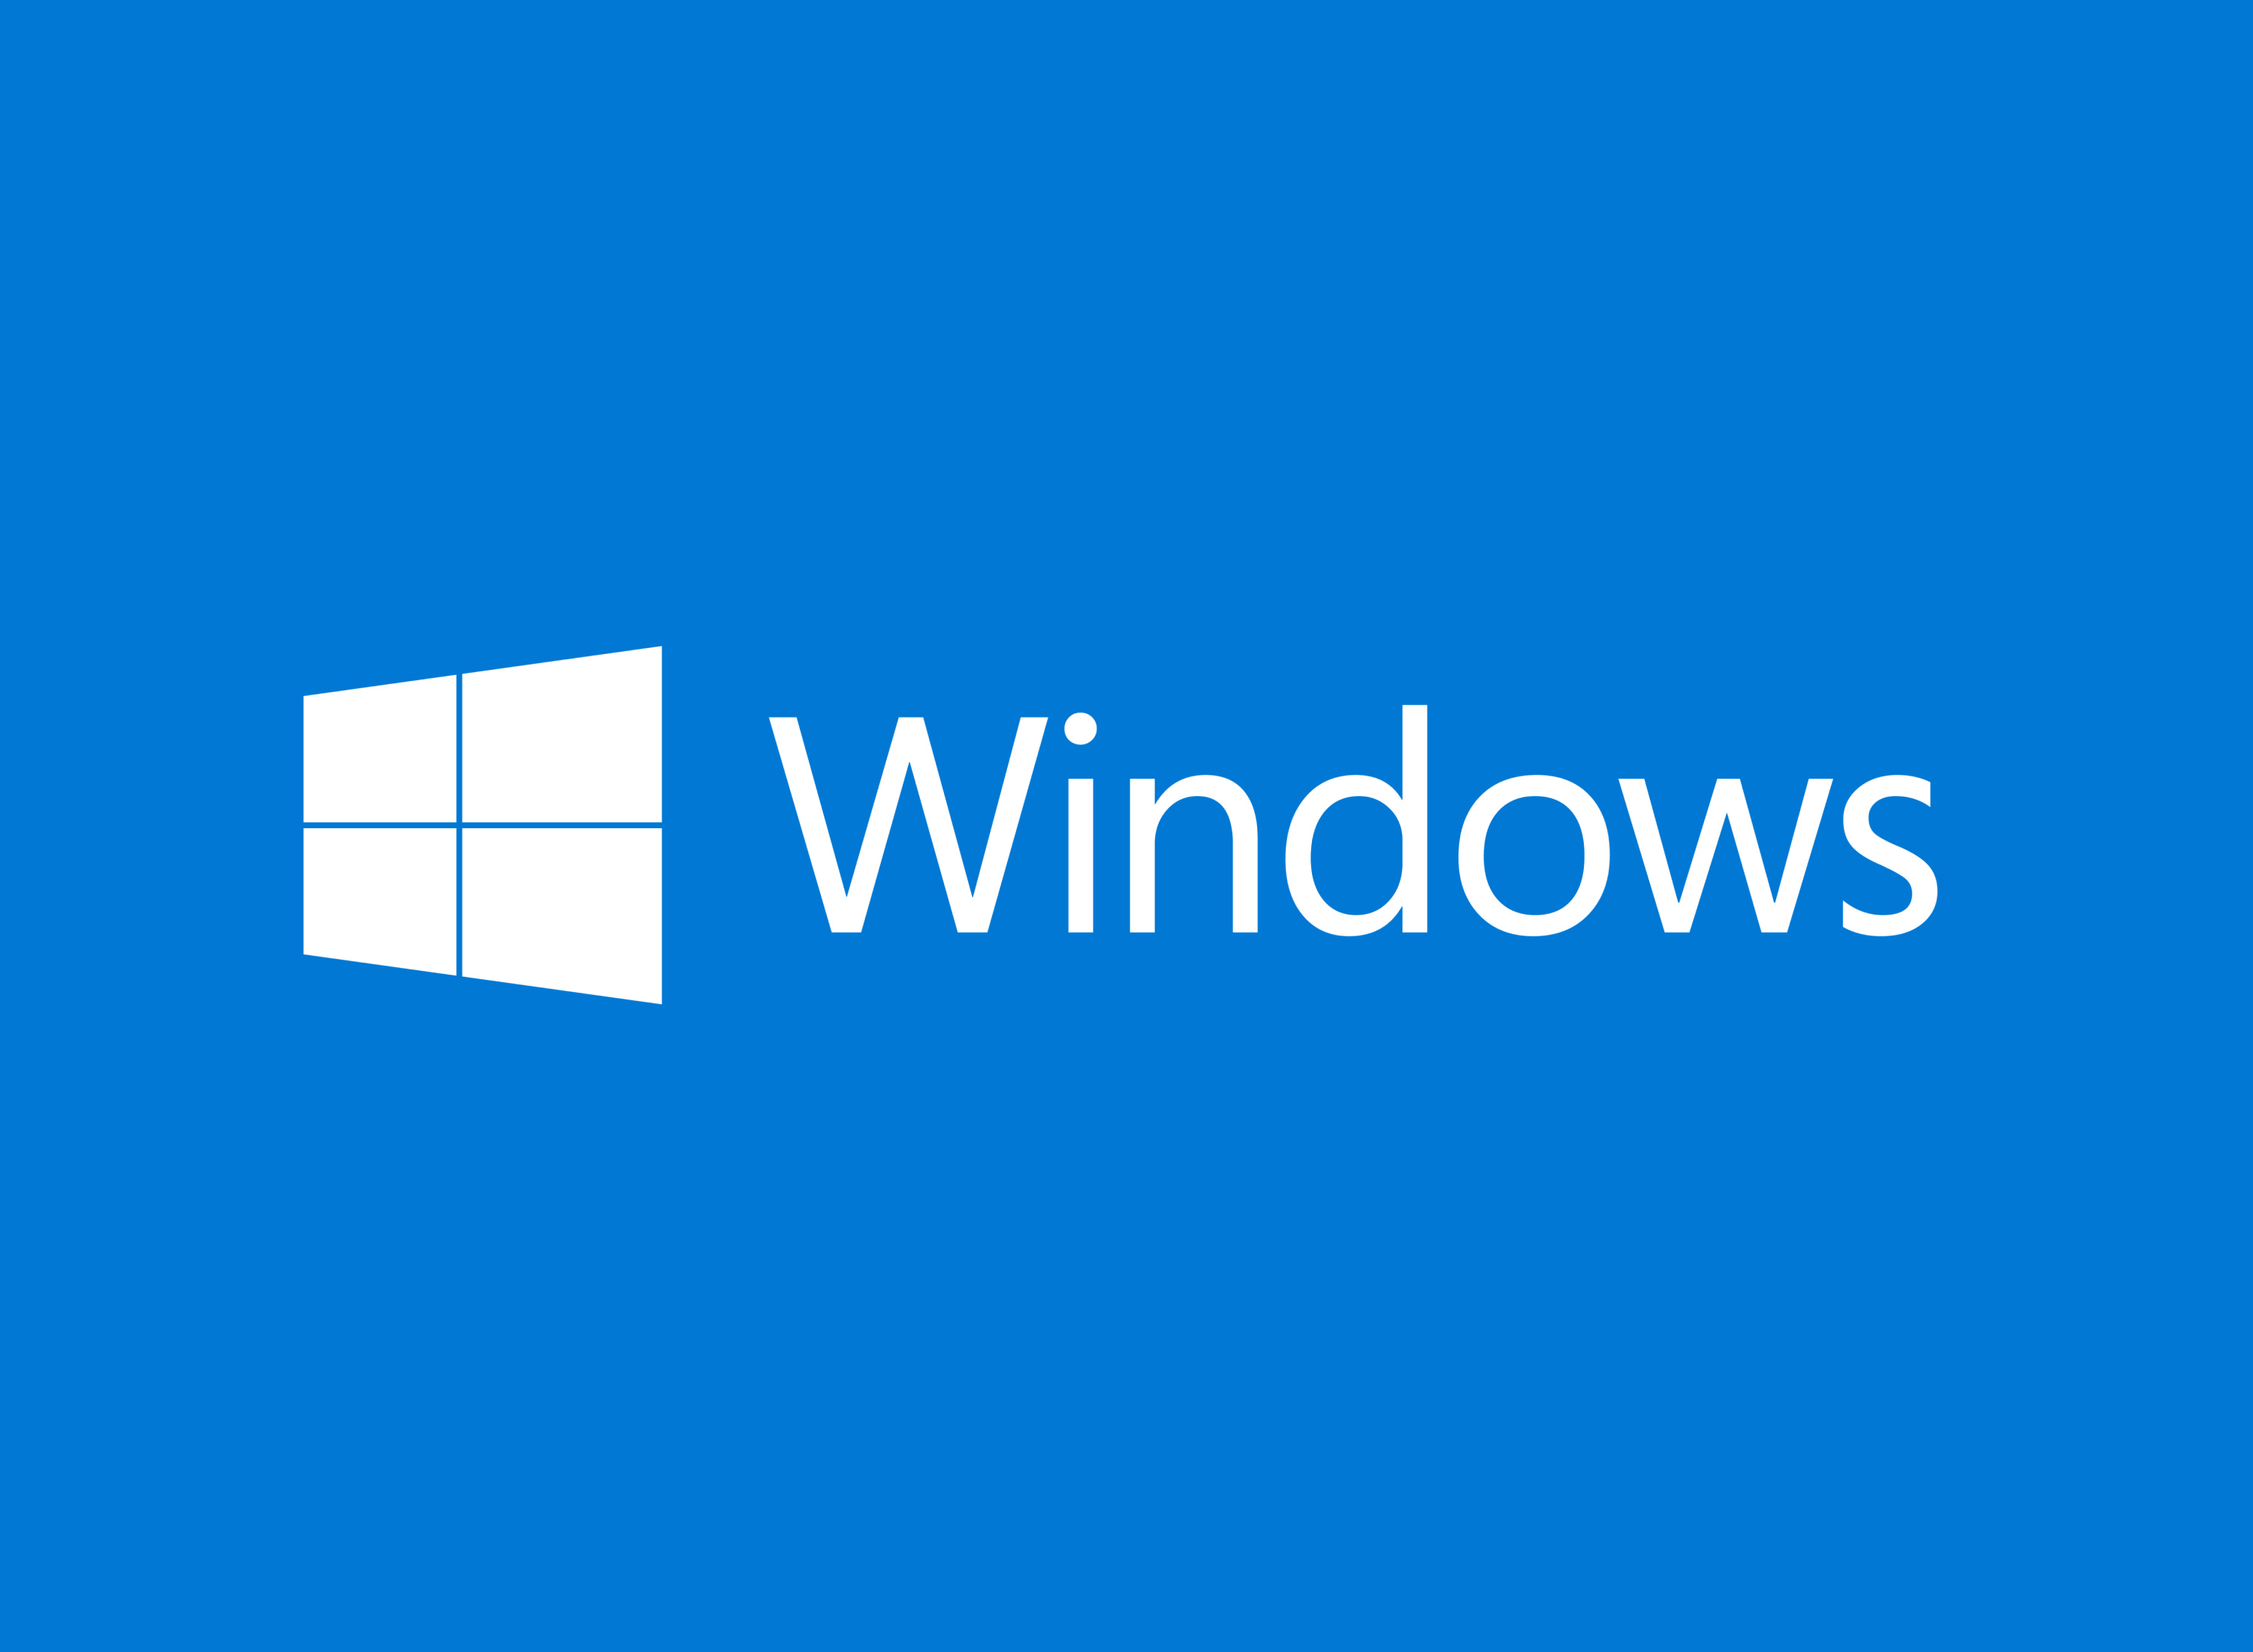 How to get the Windows 10 October 2020 Update